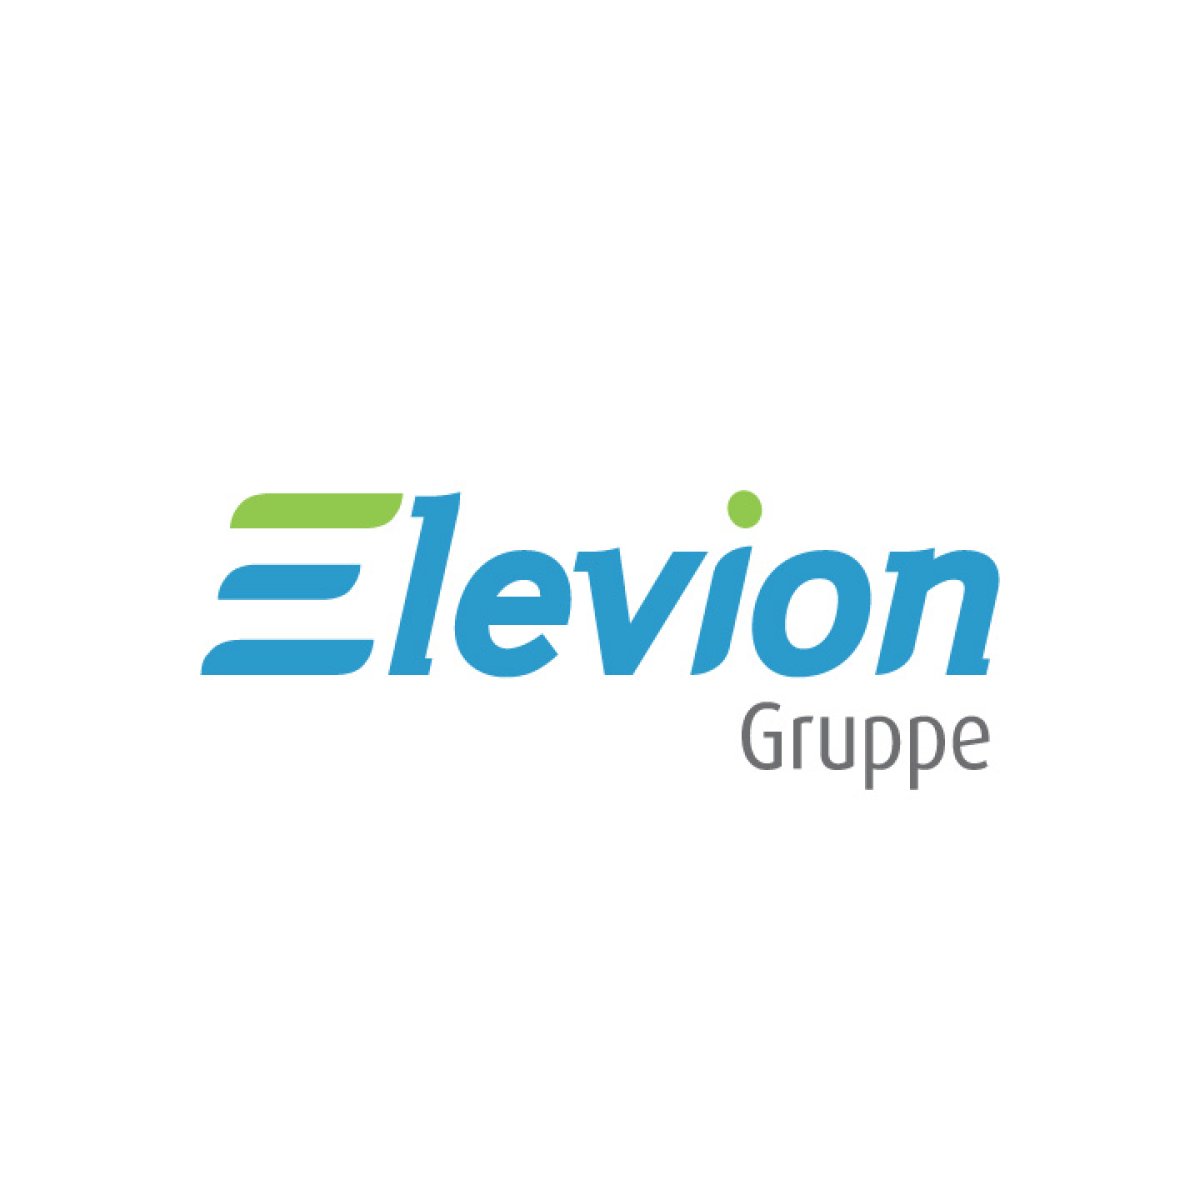 Image - Elevion Gruppe